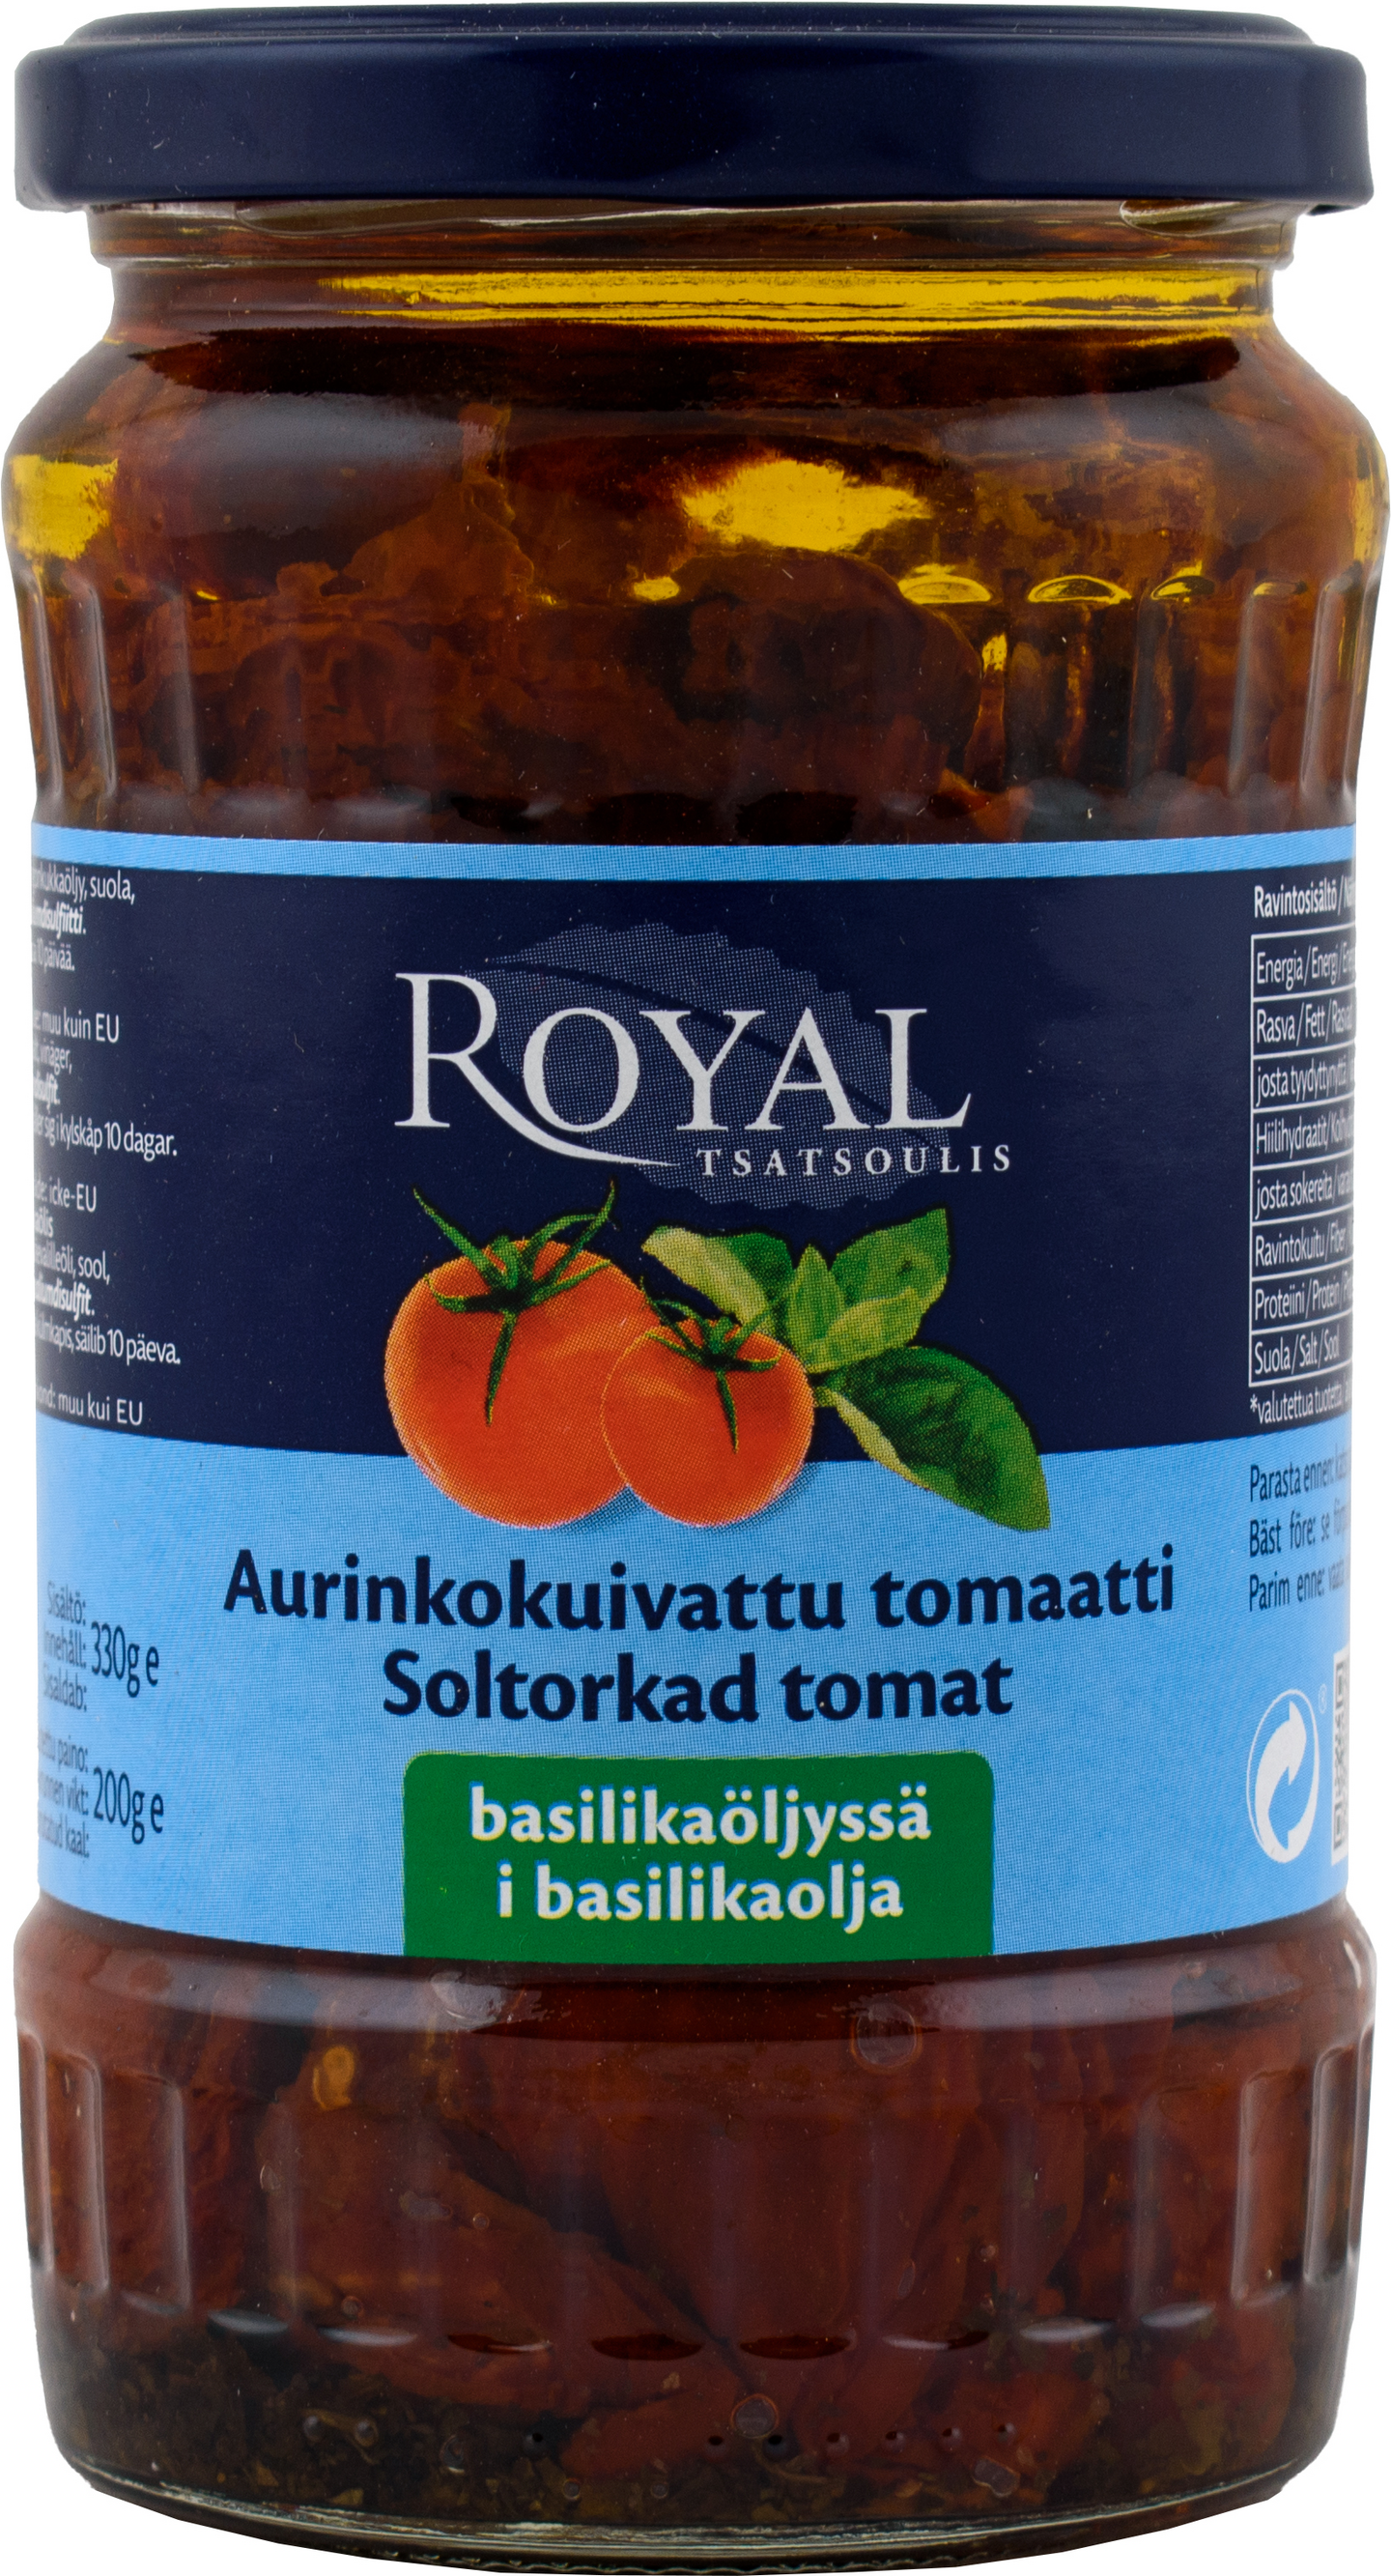 Royal aurinkokuivattu tomaatti basilikaöljyssä 330g/200g